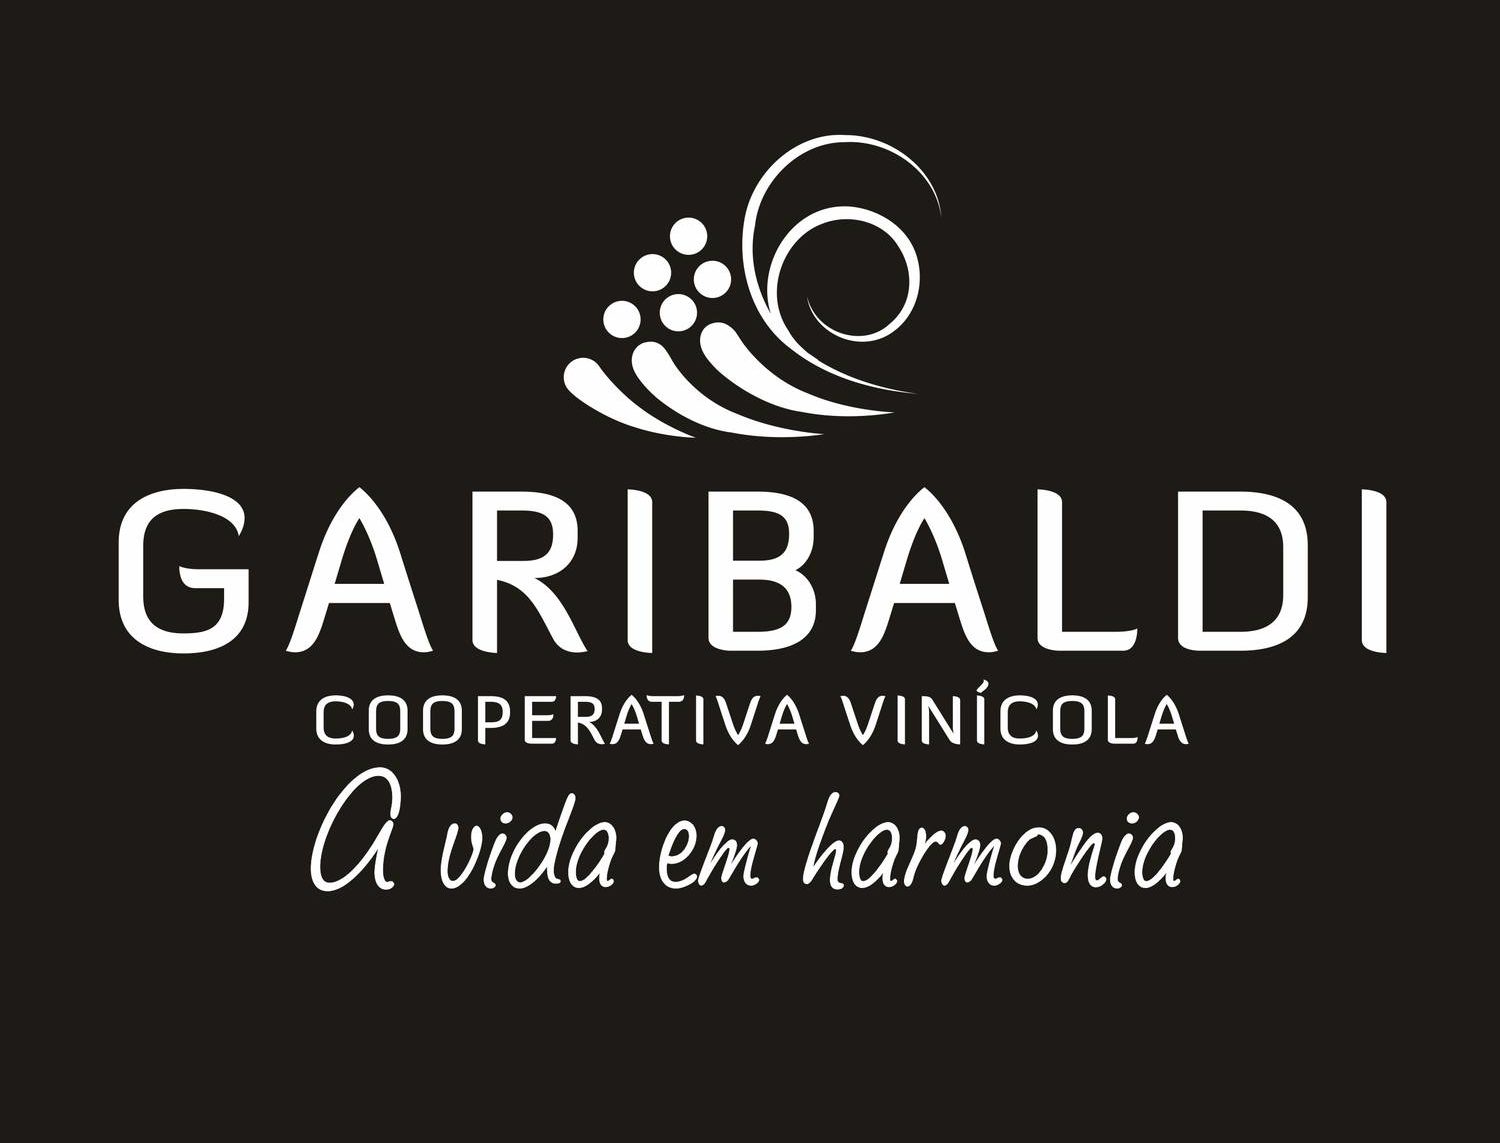 Garibaldi winery in Serra Gaucha